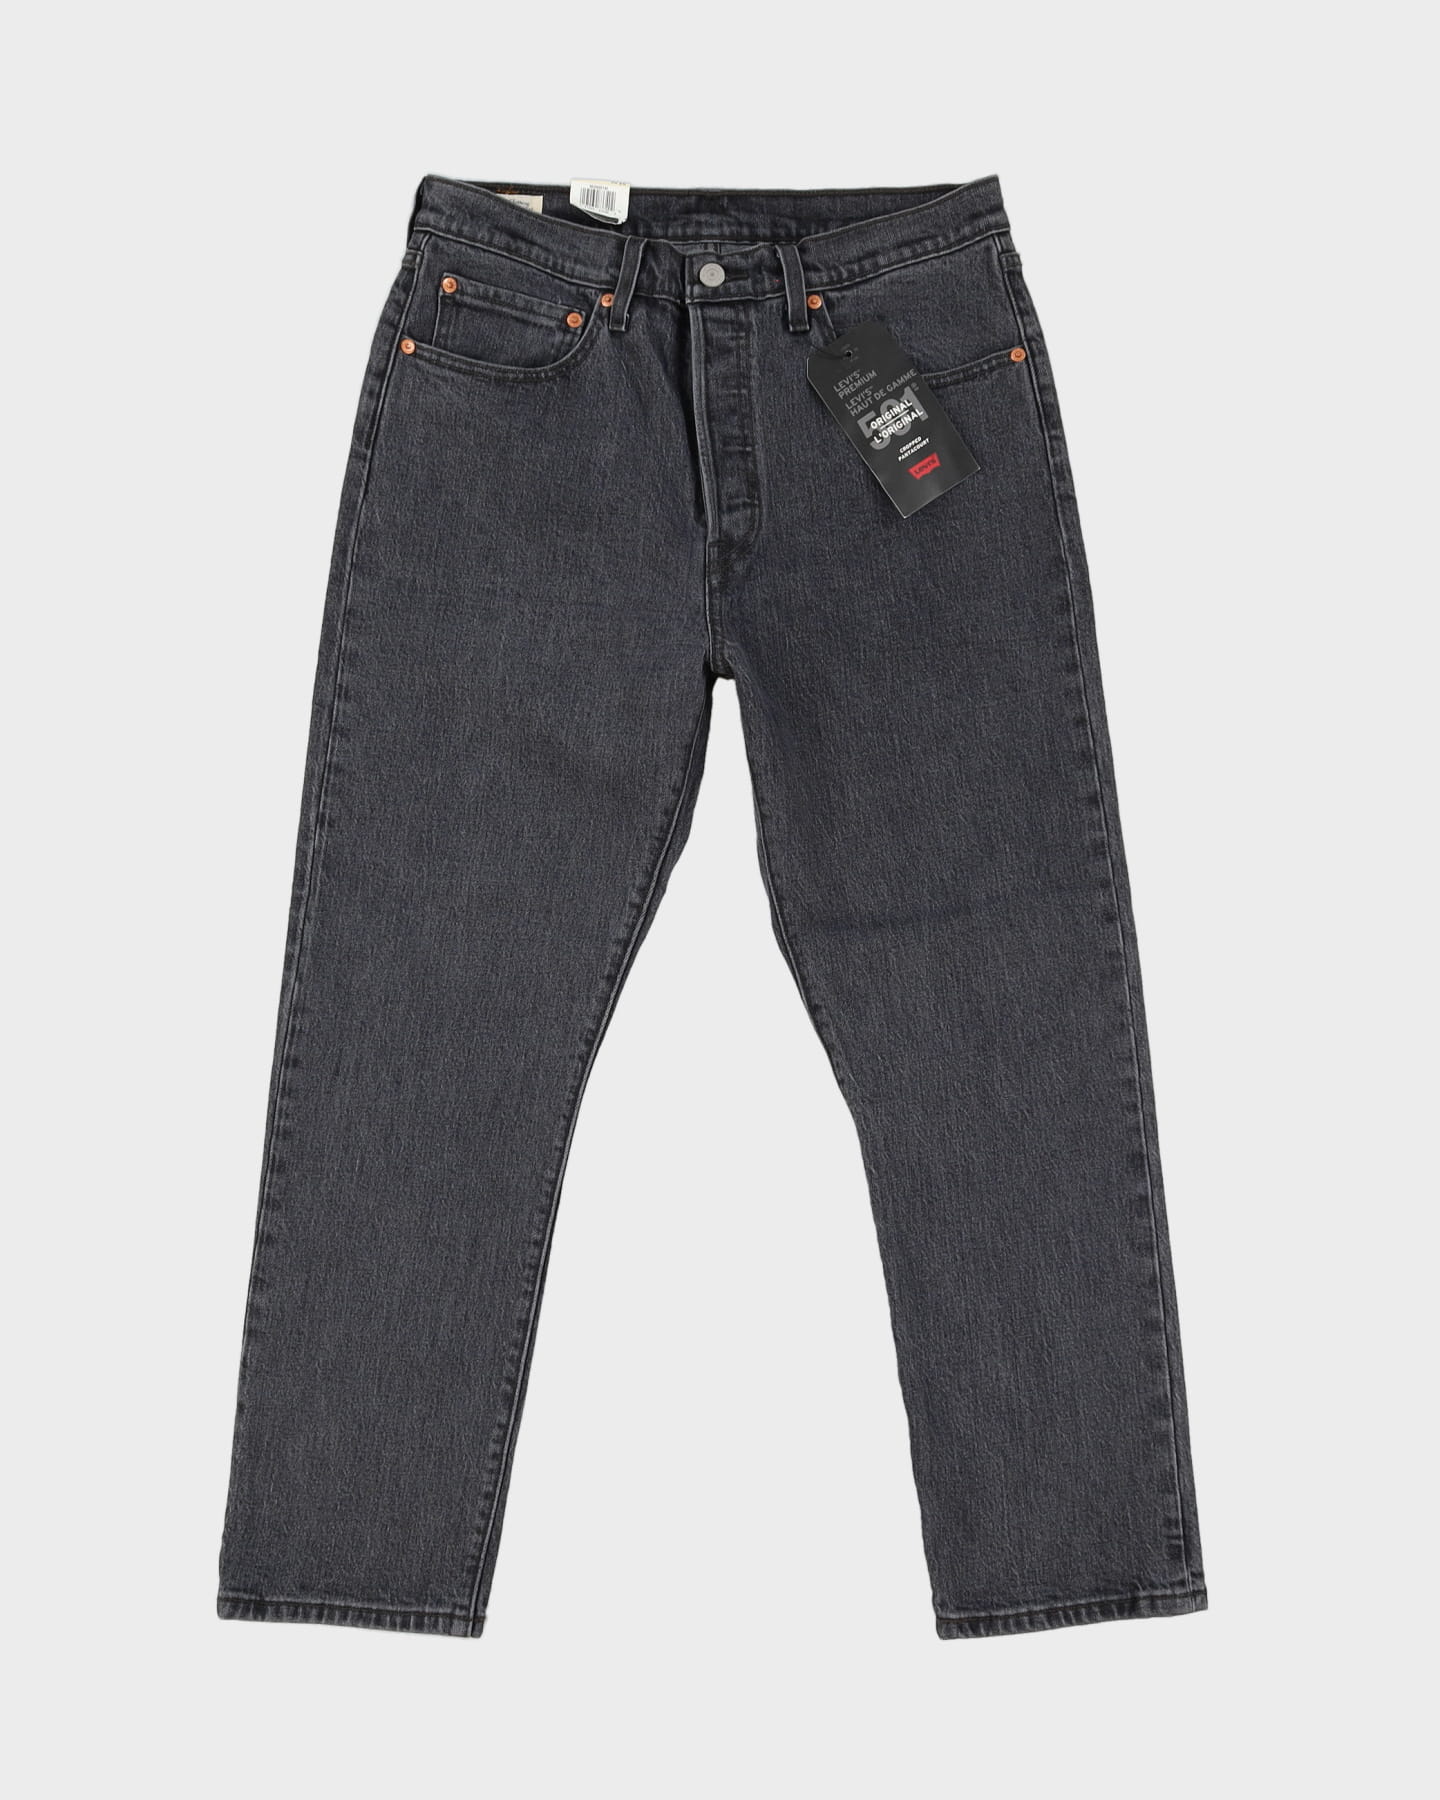 Deadstock With Tags Levi's 501 Big E Dark Wash Black Jeans - W30 L26